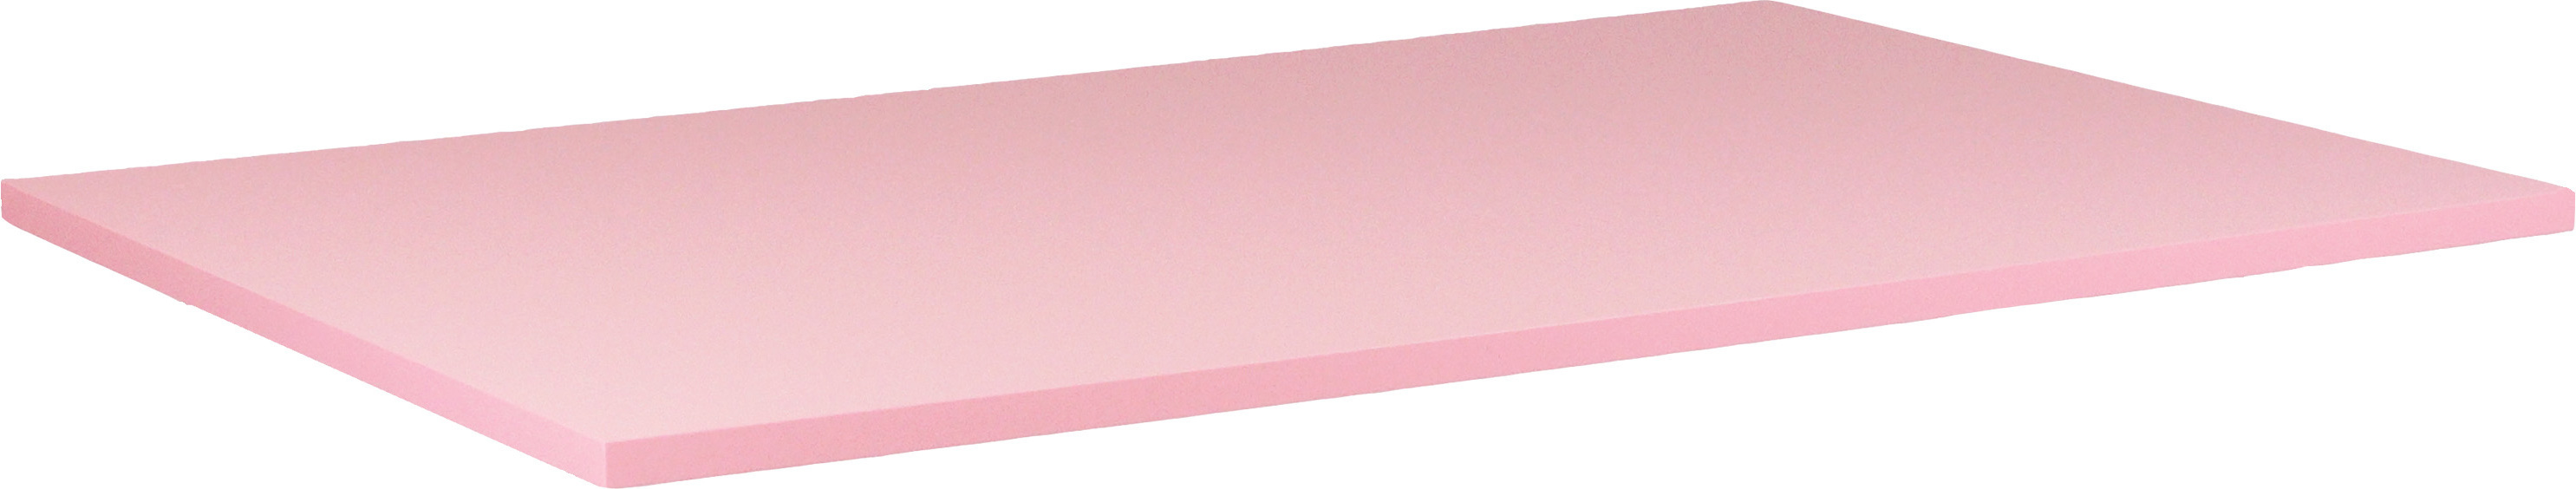 Elfen Ergodesk -pöytälevy, 120 x 75 cm, pinkki